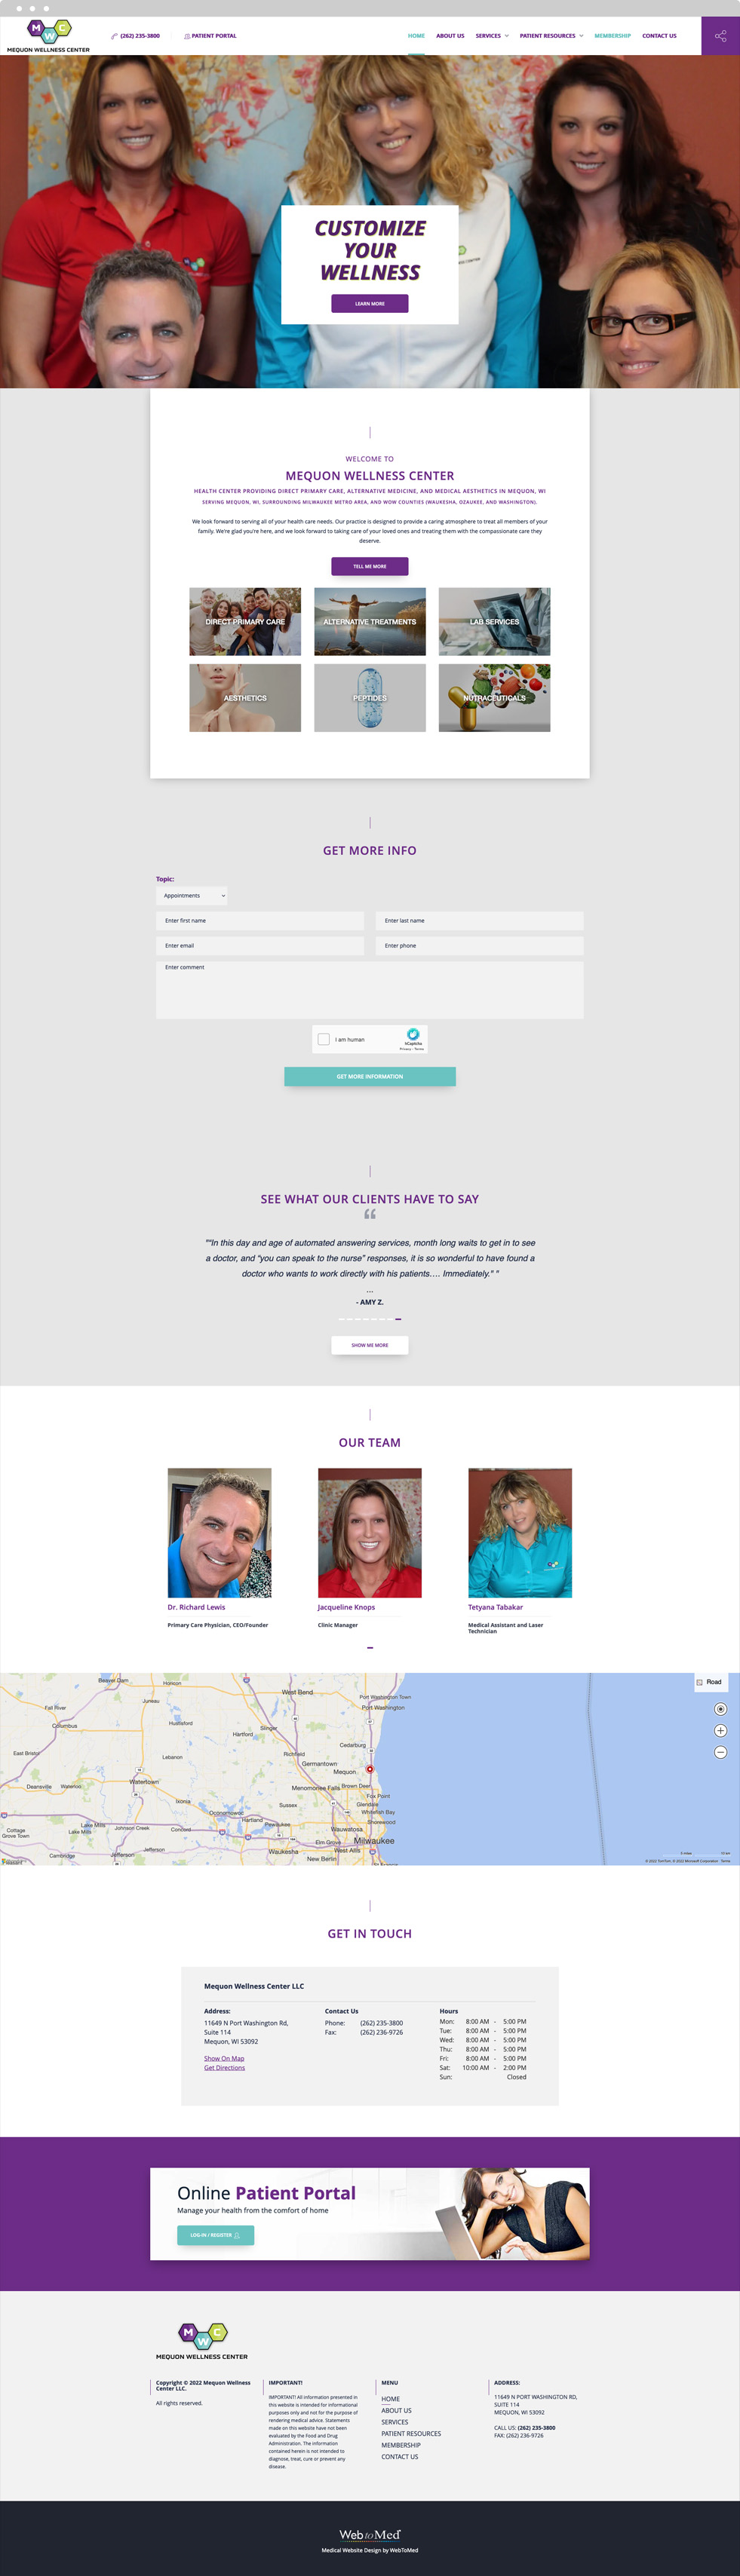 Concierge Medicine Website Design - Mequon Wellness Center - Homepage